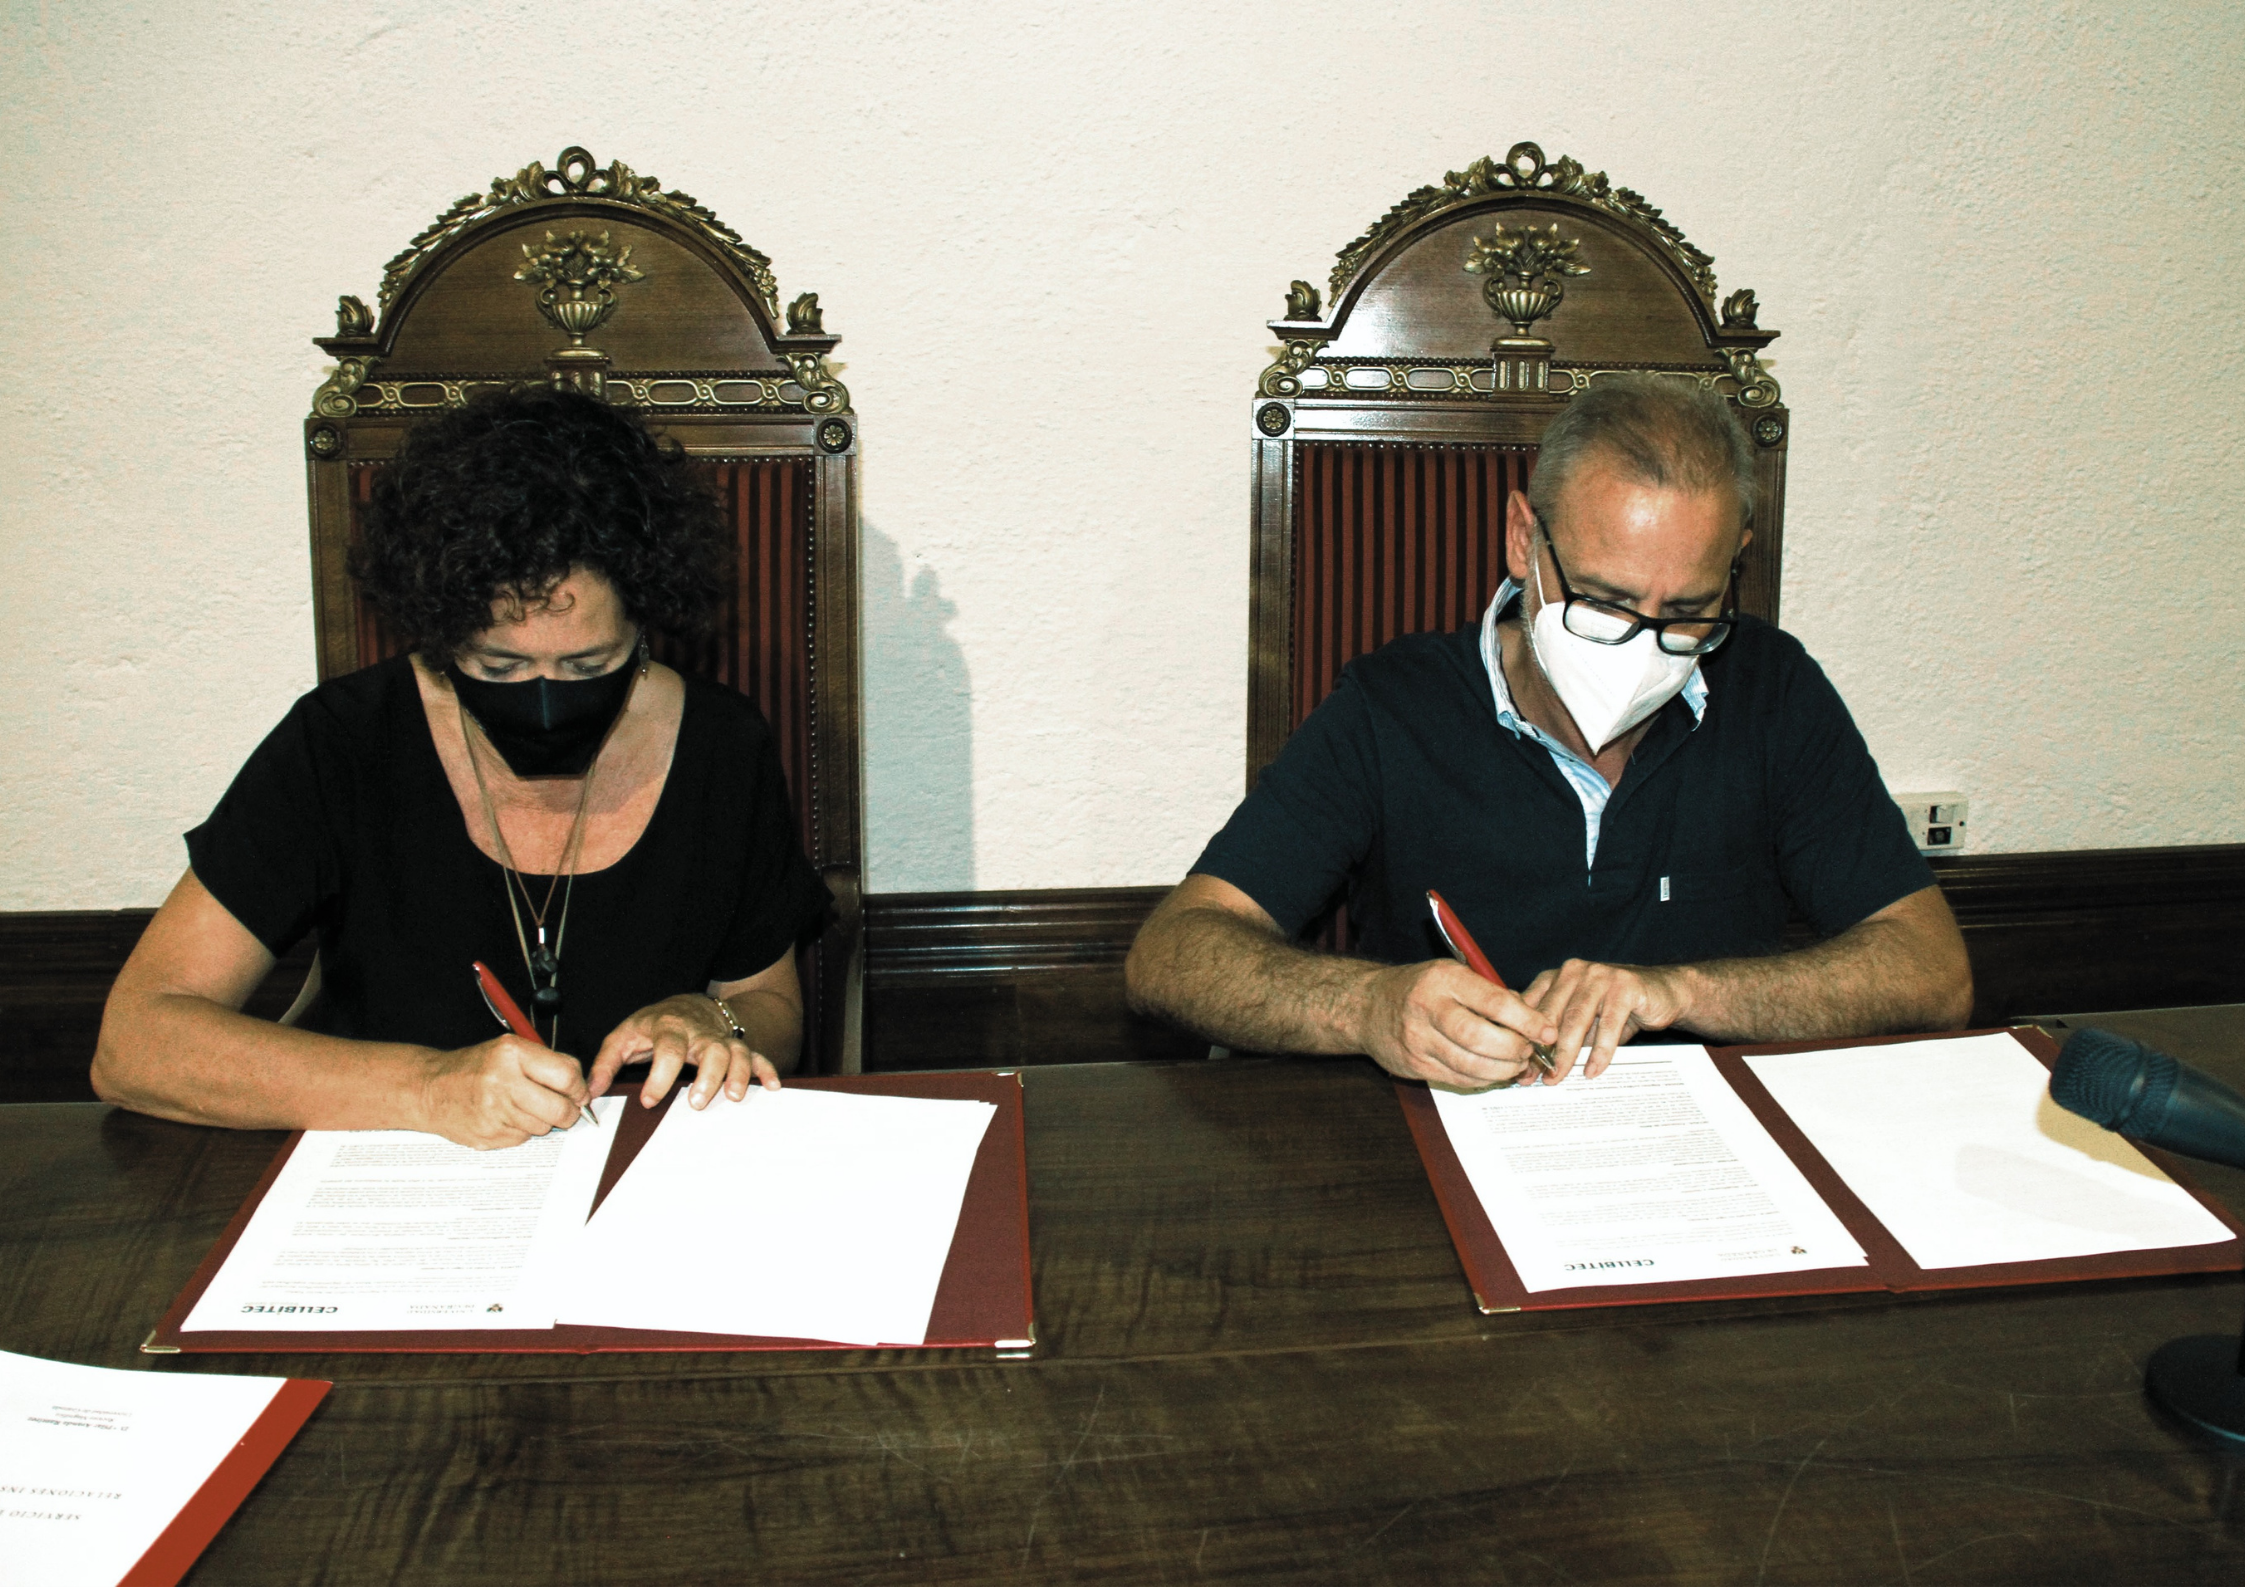 Dos personas sentadas firmando sobre un papel